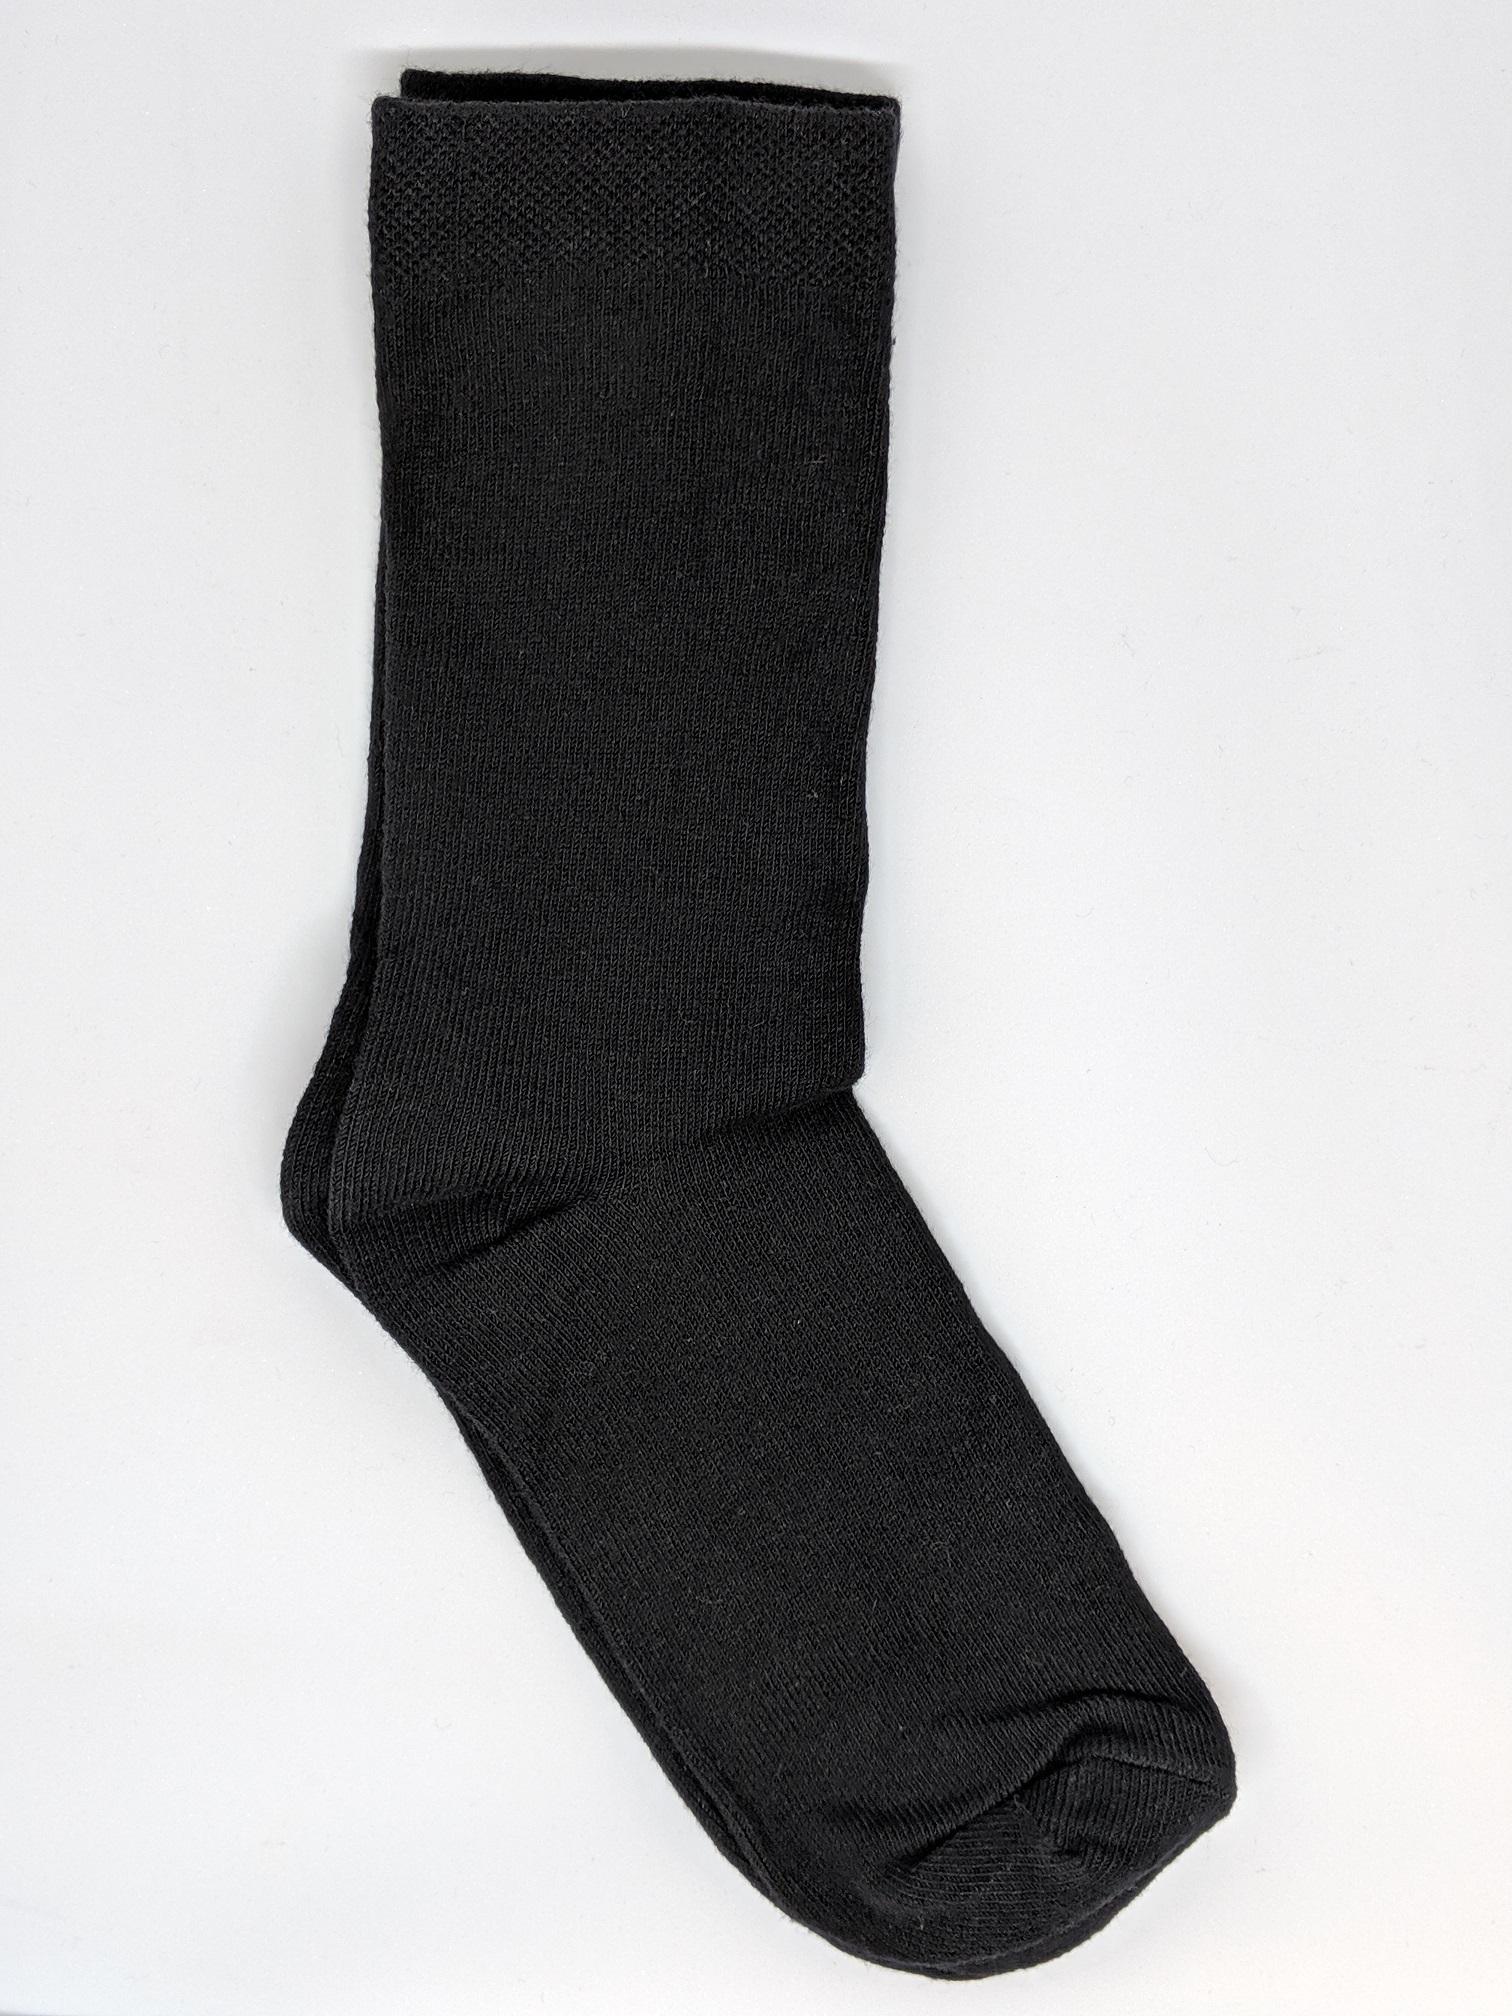 Black Cotton Long School Socks 3 Pair